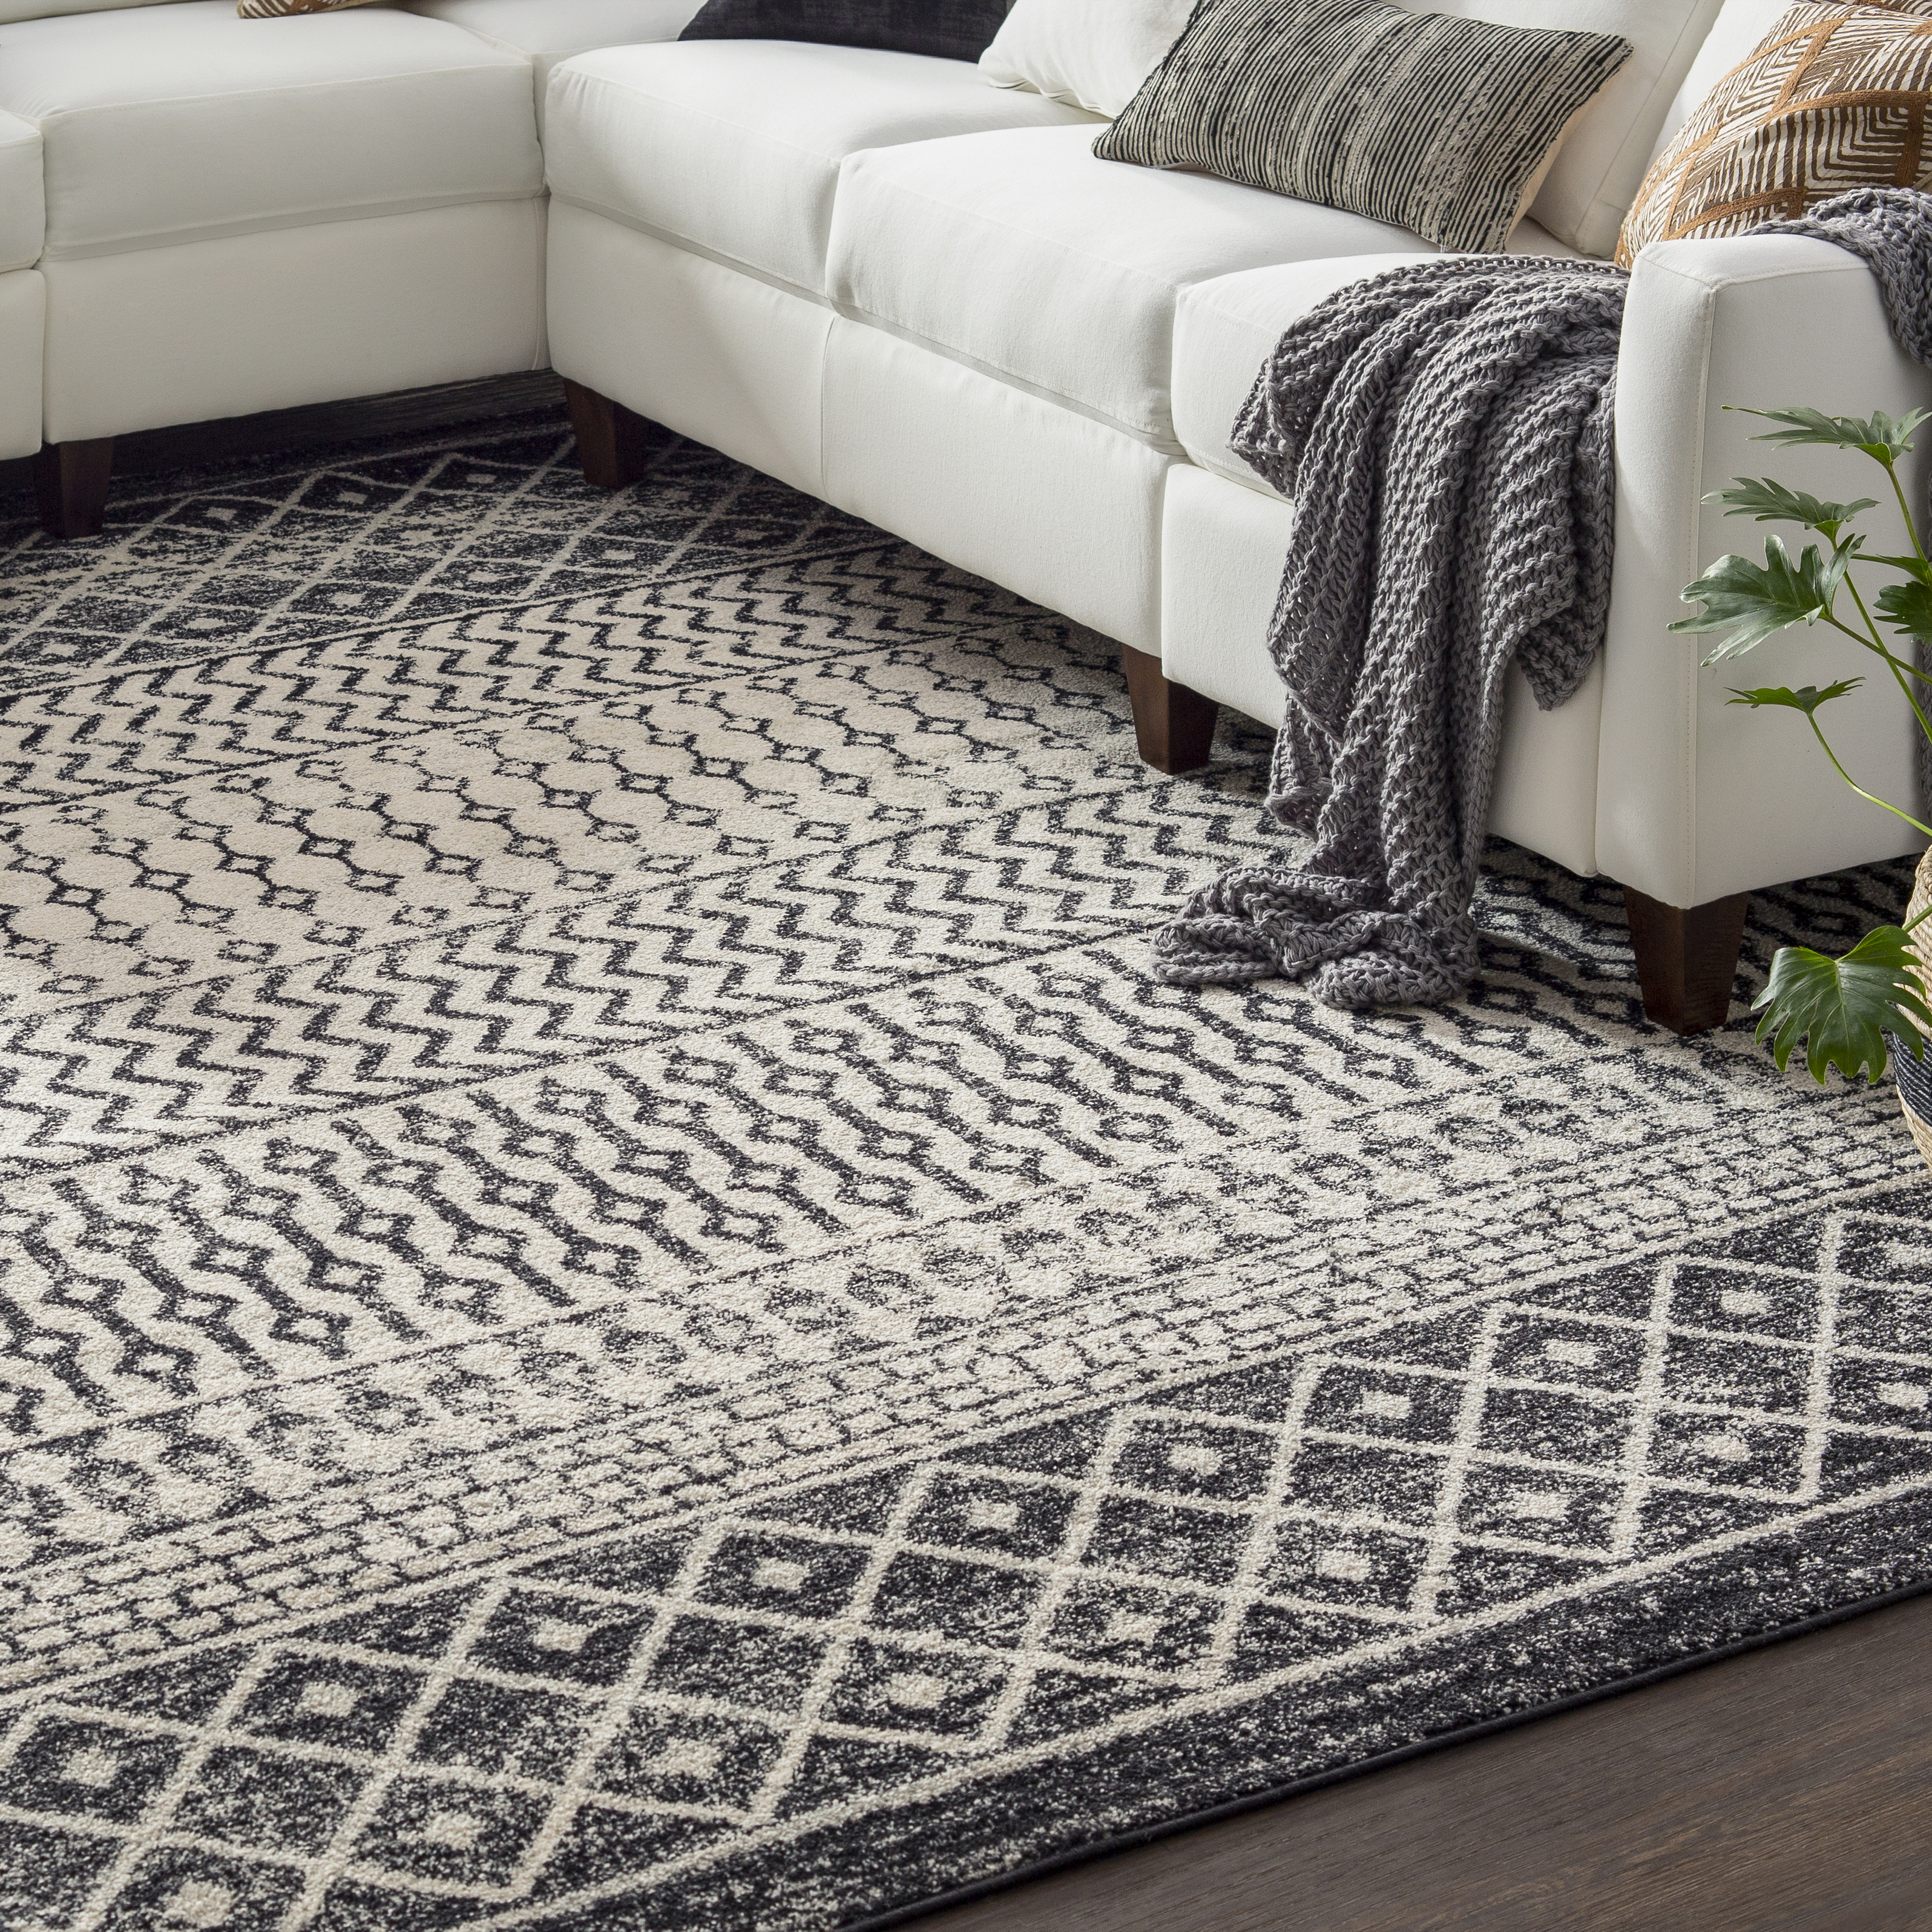 Cream and Grey Rug 100% Cotton Woven Carpet Modern Living Room Bedroom Rug Mat 